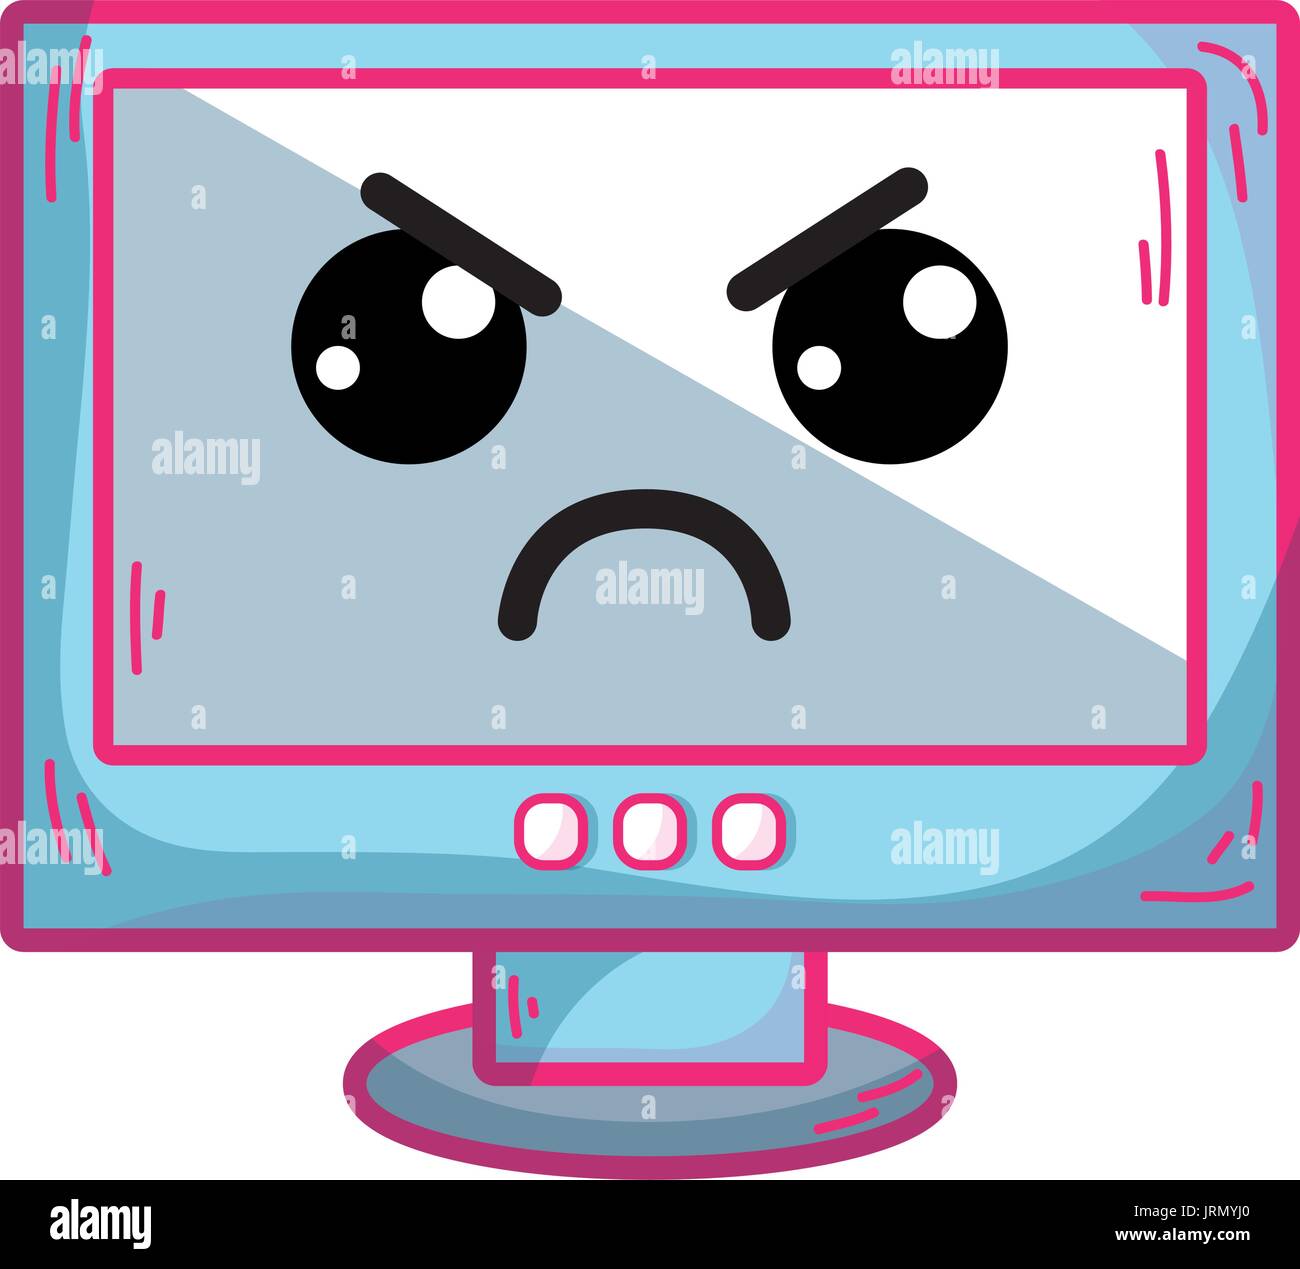 kawaii cute angry computer technology Stock Vector Image & Art - Alamy